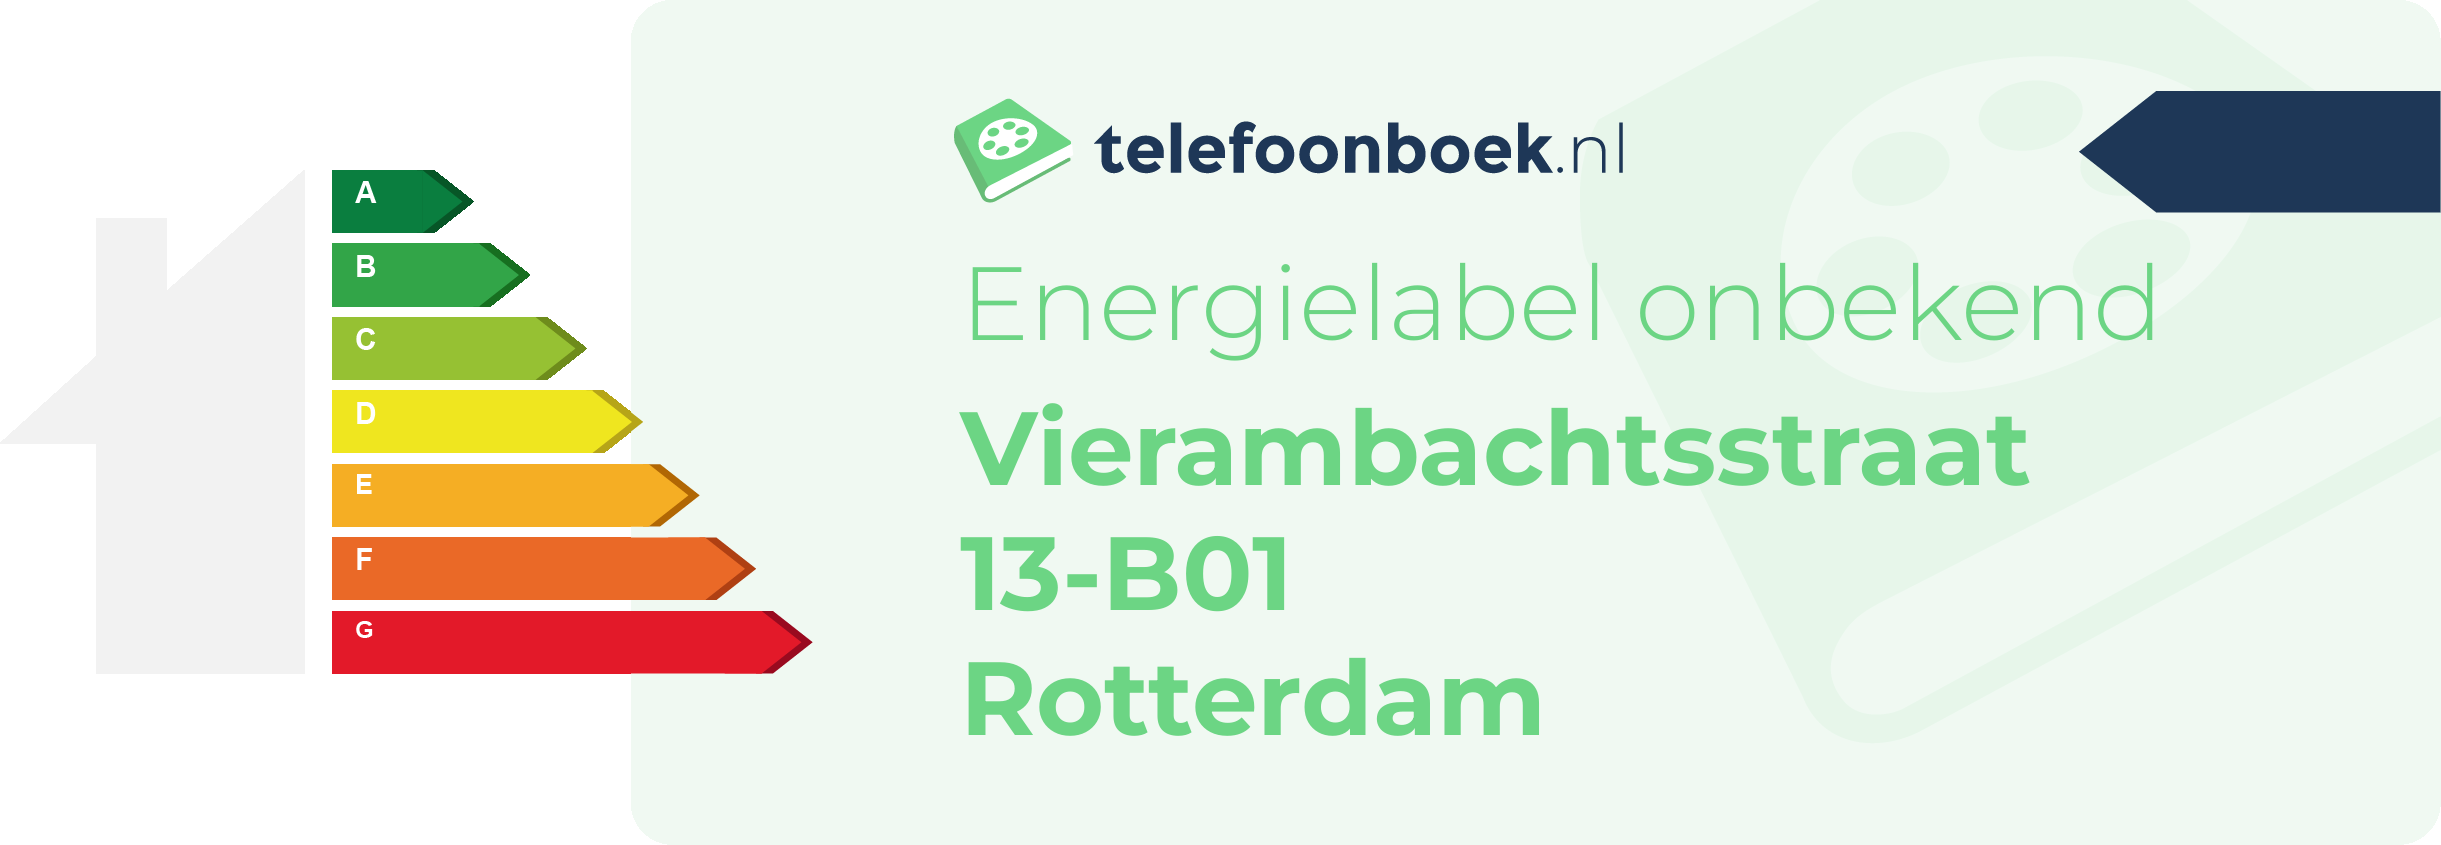 Energielabel Vierambachtsstraat 13-B01 Rotterdam